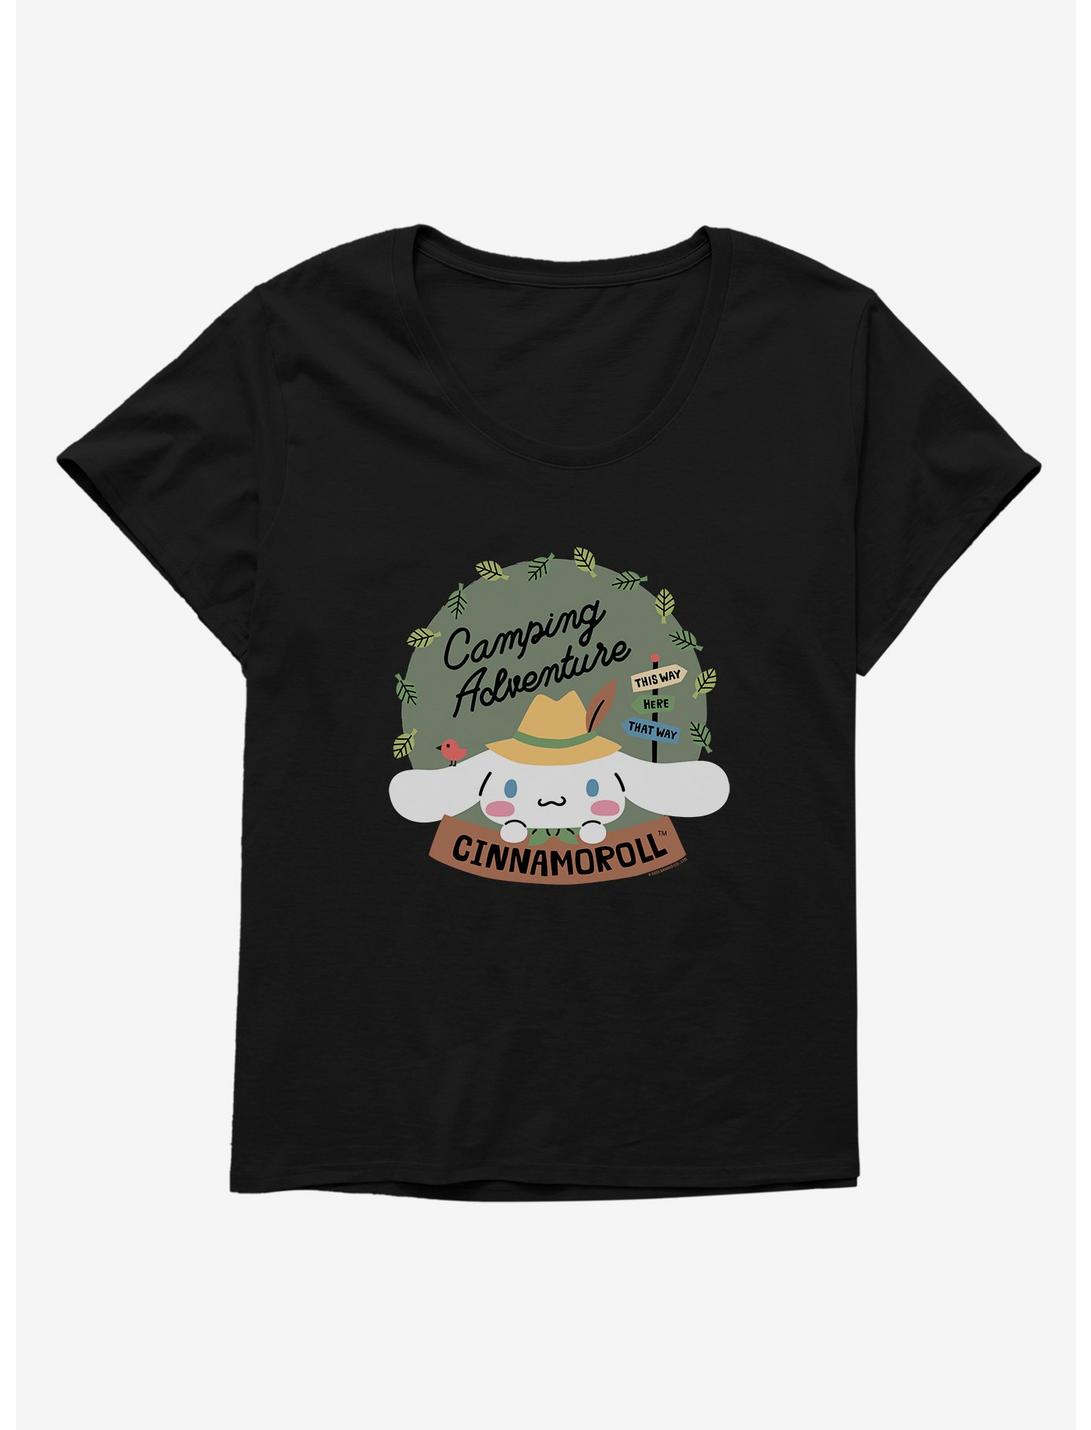 Cinnamoroll Camping Adventure Waysign Womens T-Shirt Plus Size, BLACK, hi-res